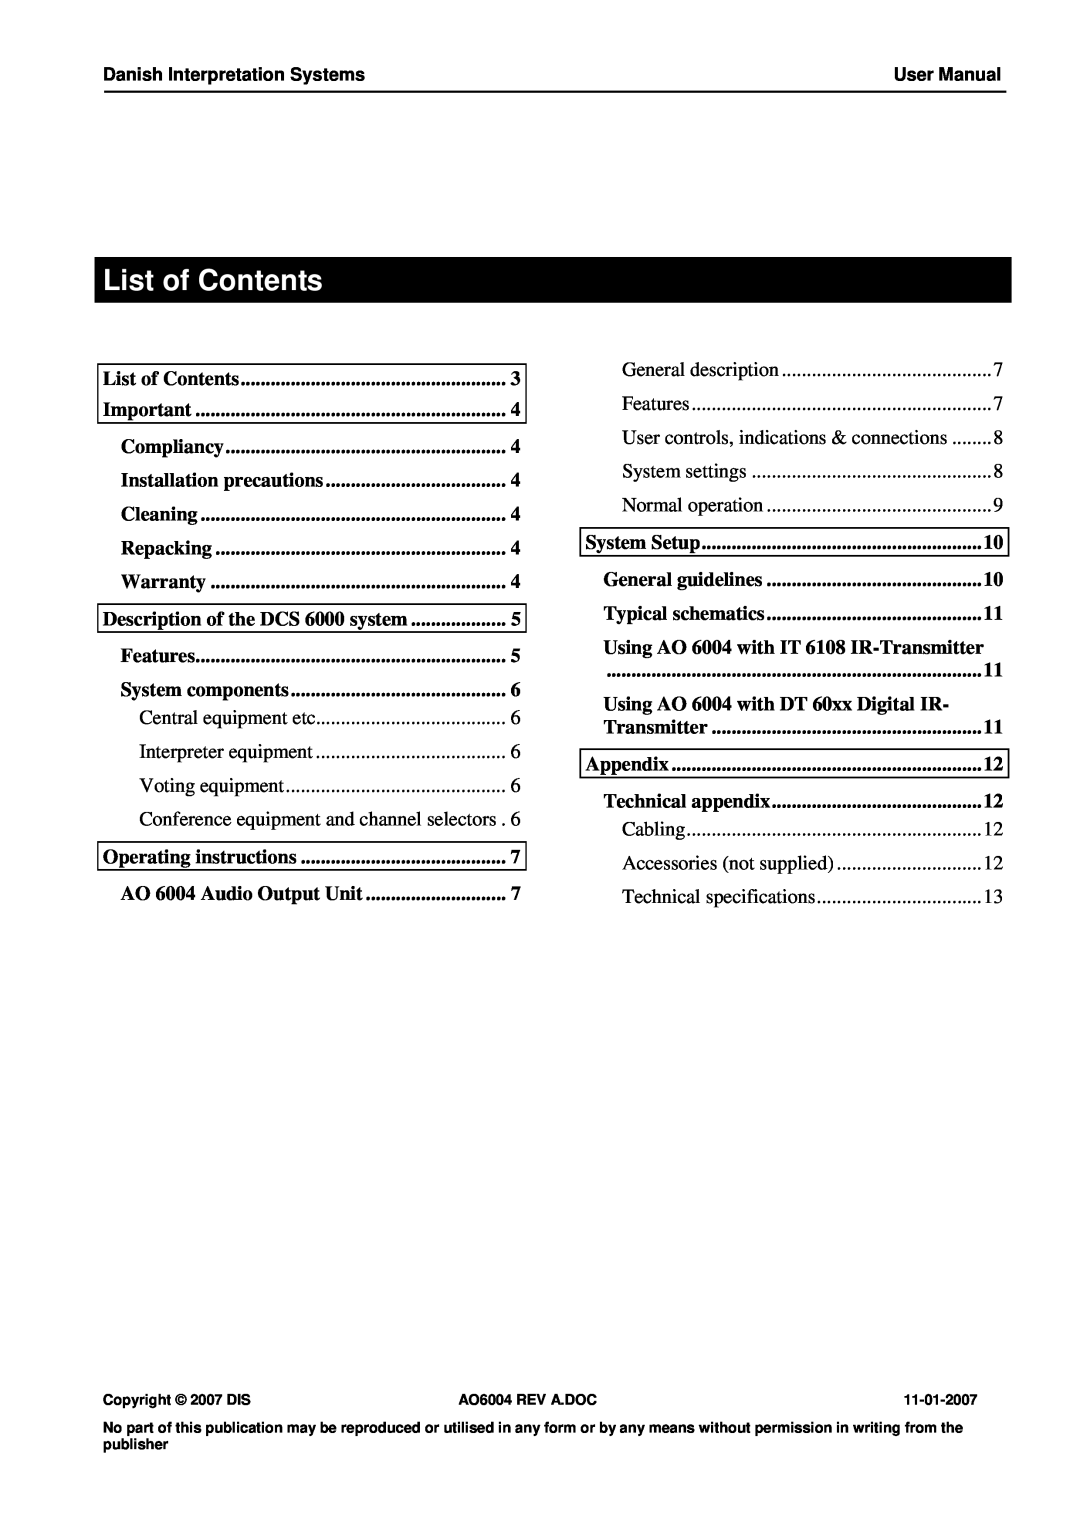 Listen Technologies AO 6004 user manual List of Contents 